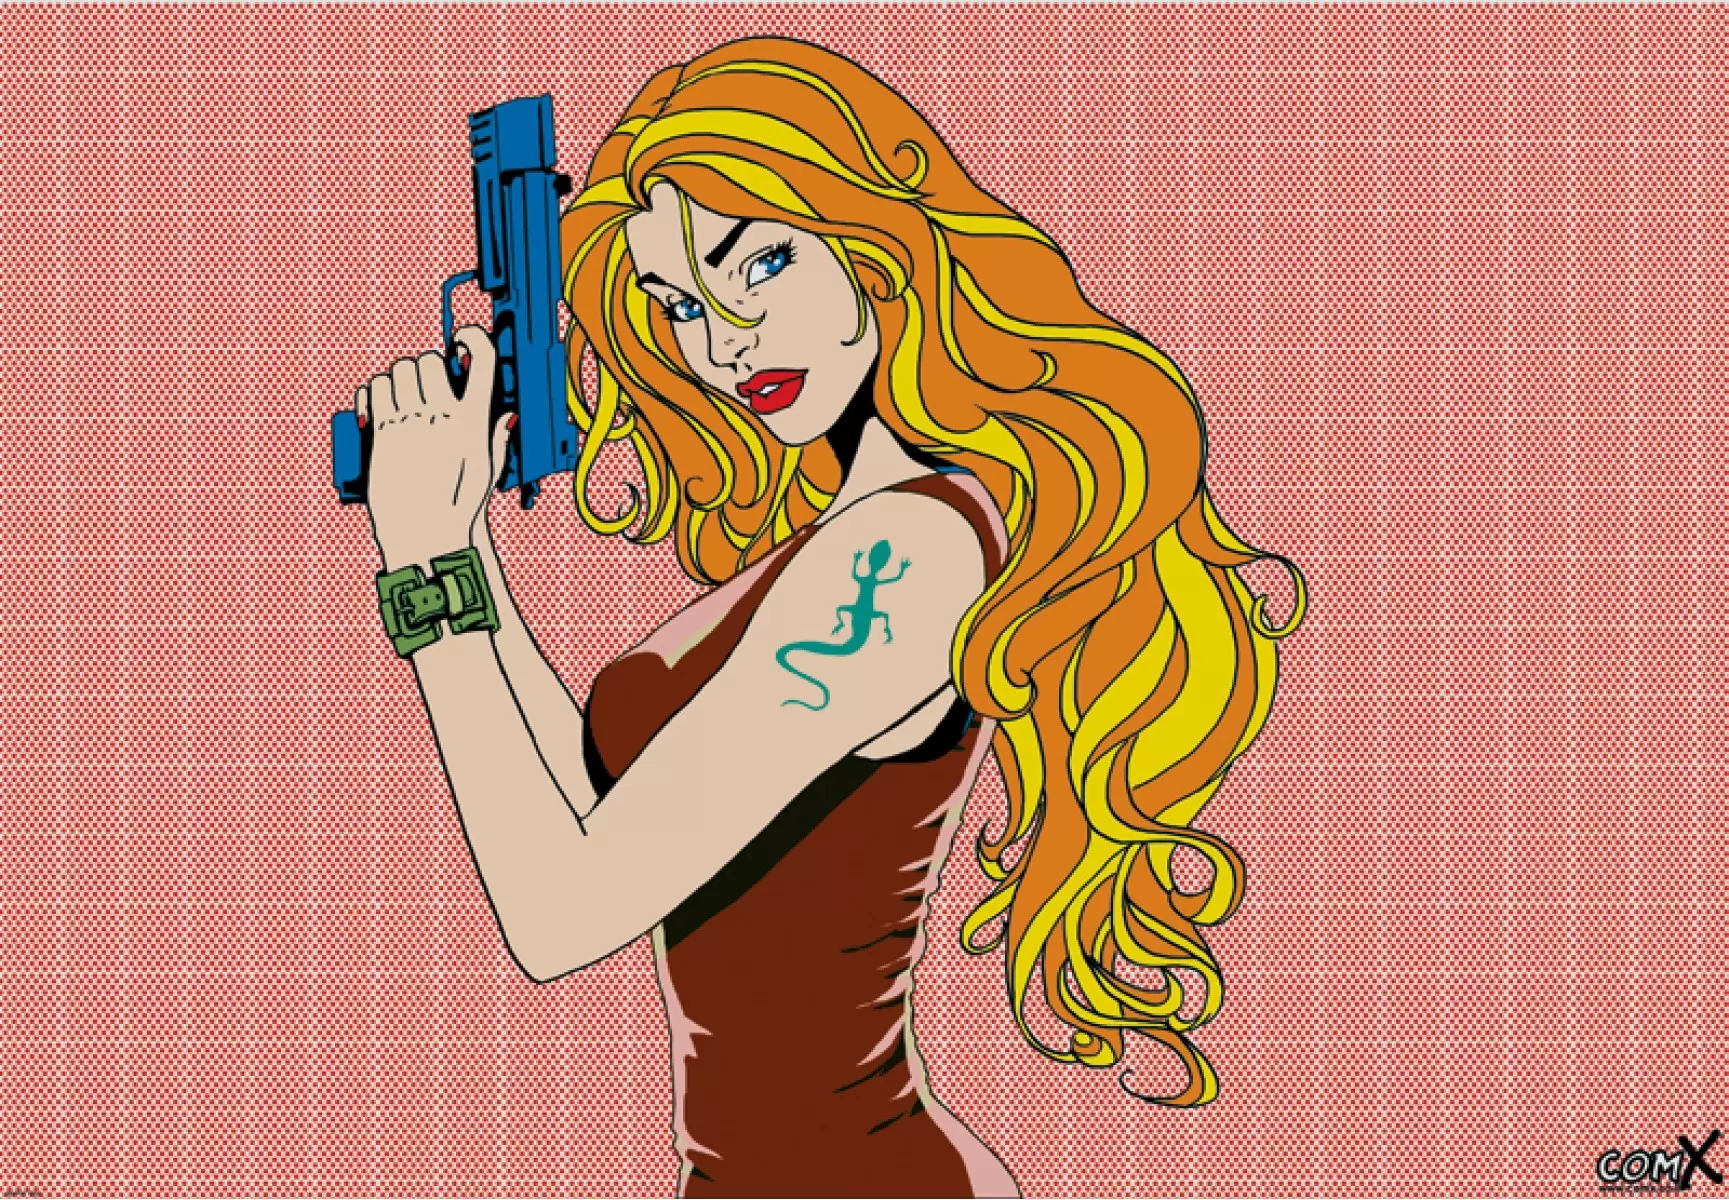 Gun girl roy - חנן אביסף - תמונות לחדר בנות קומיקס  - מק''ט: 52176